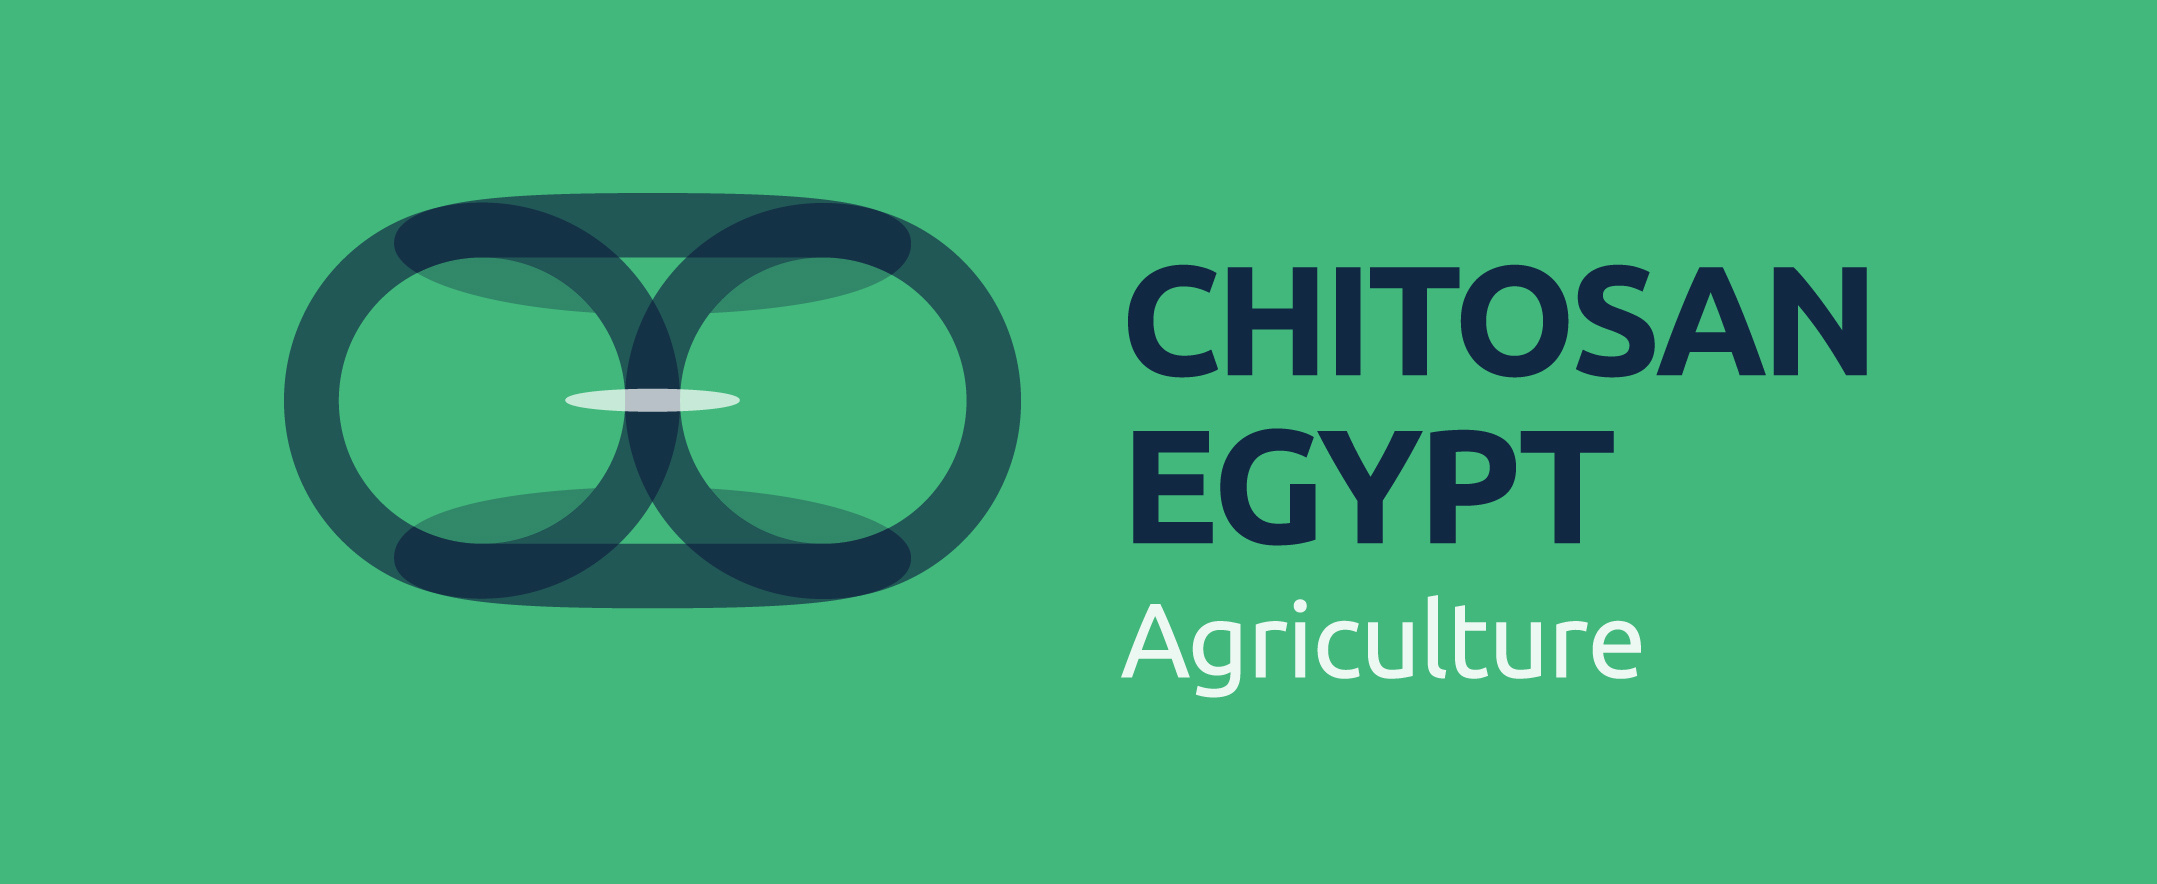 Chitosan Egypt